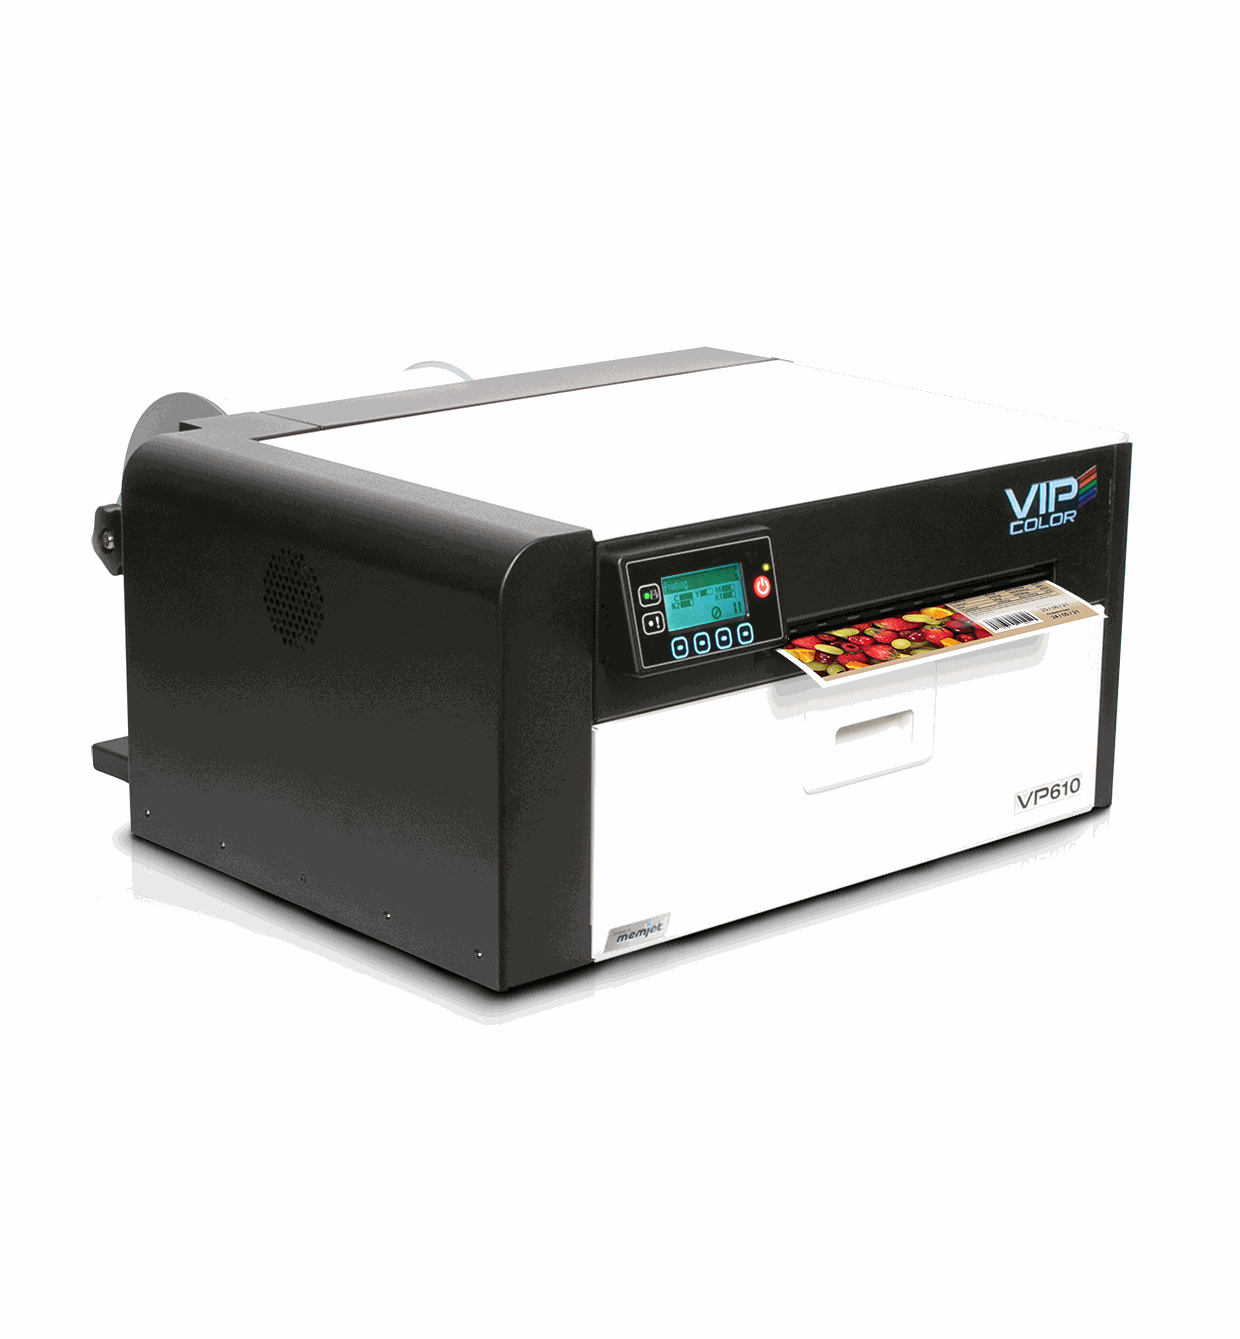 VIPColor VP660 Color Label Printer